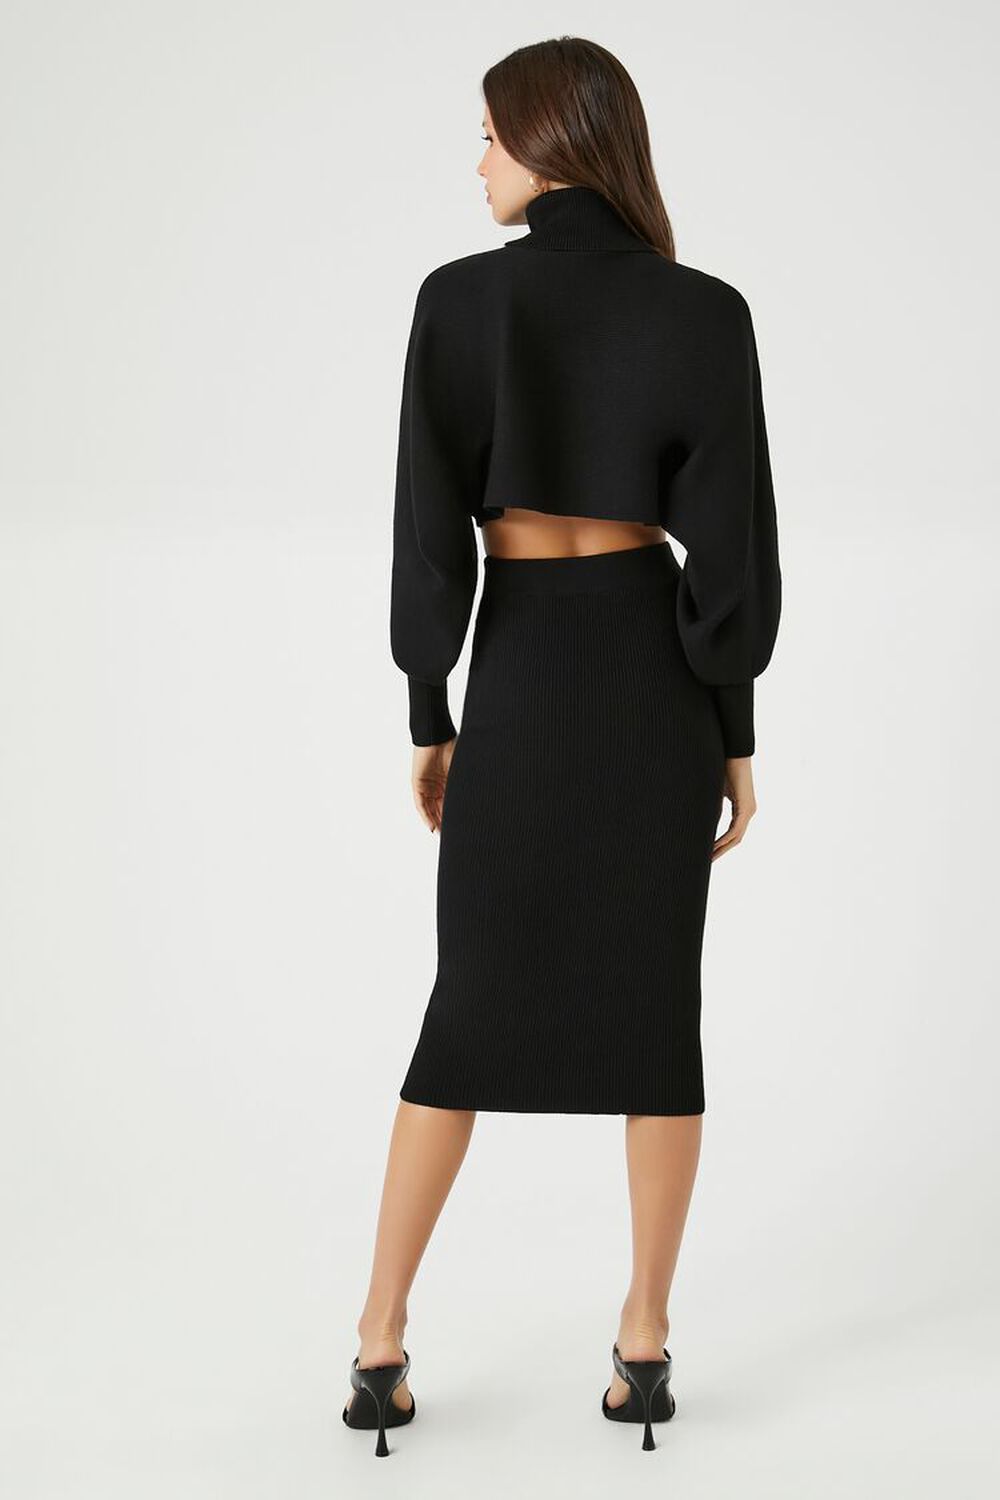 BLACK Turtleneck Sweater & Skirt Set, image 3